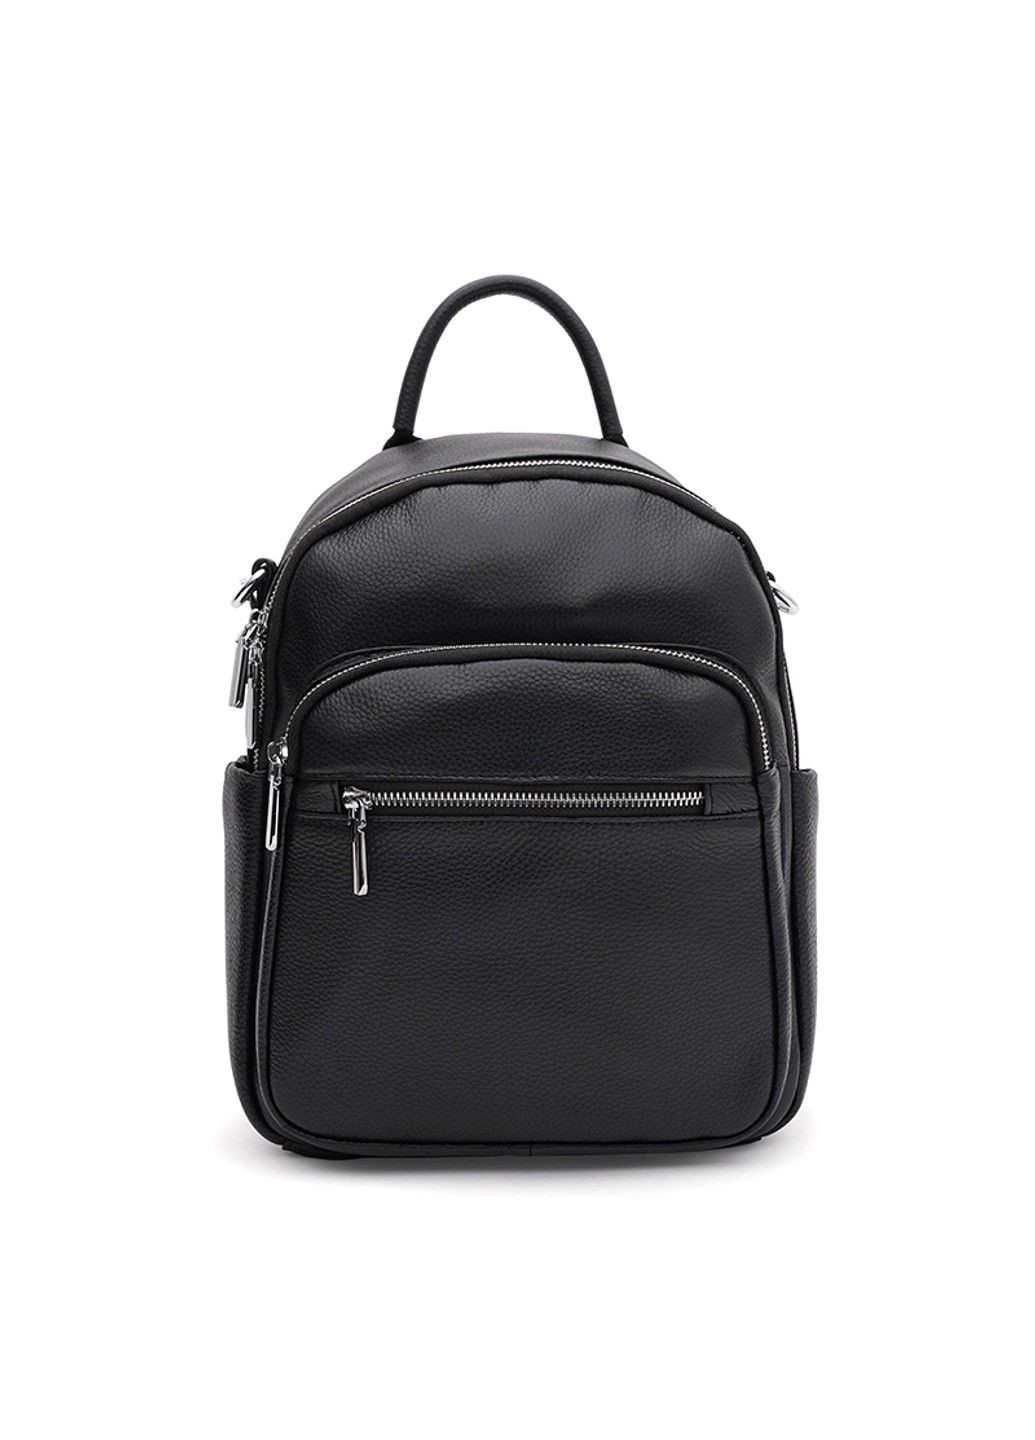 Женский кожаный рюкзак K18123bl-black Keizer (291683167)